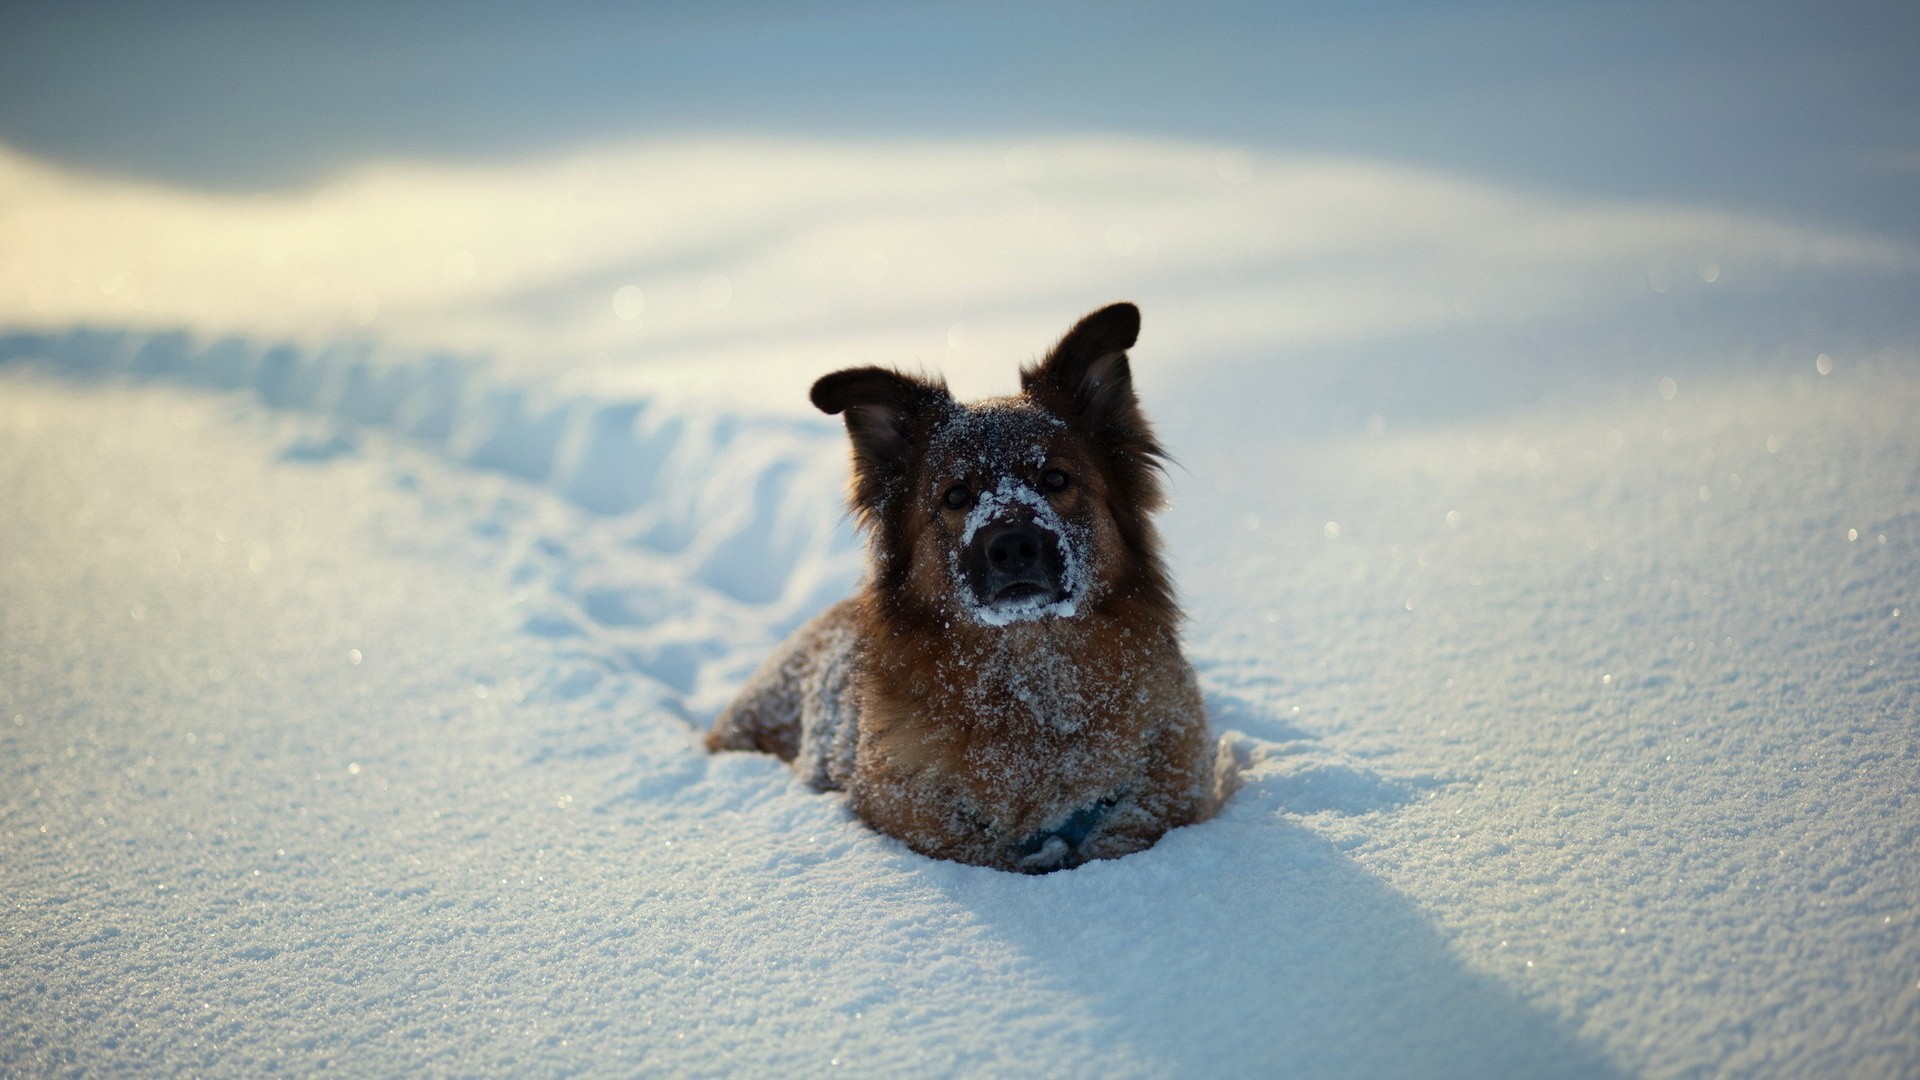 A dog in snow - Imgur